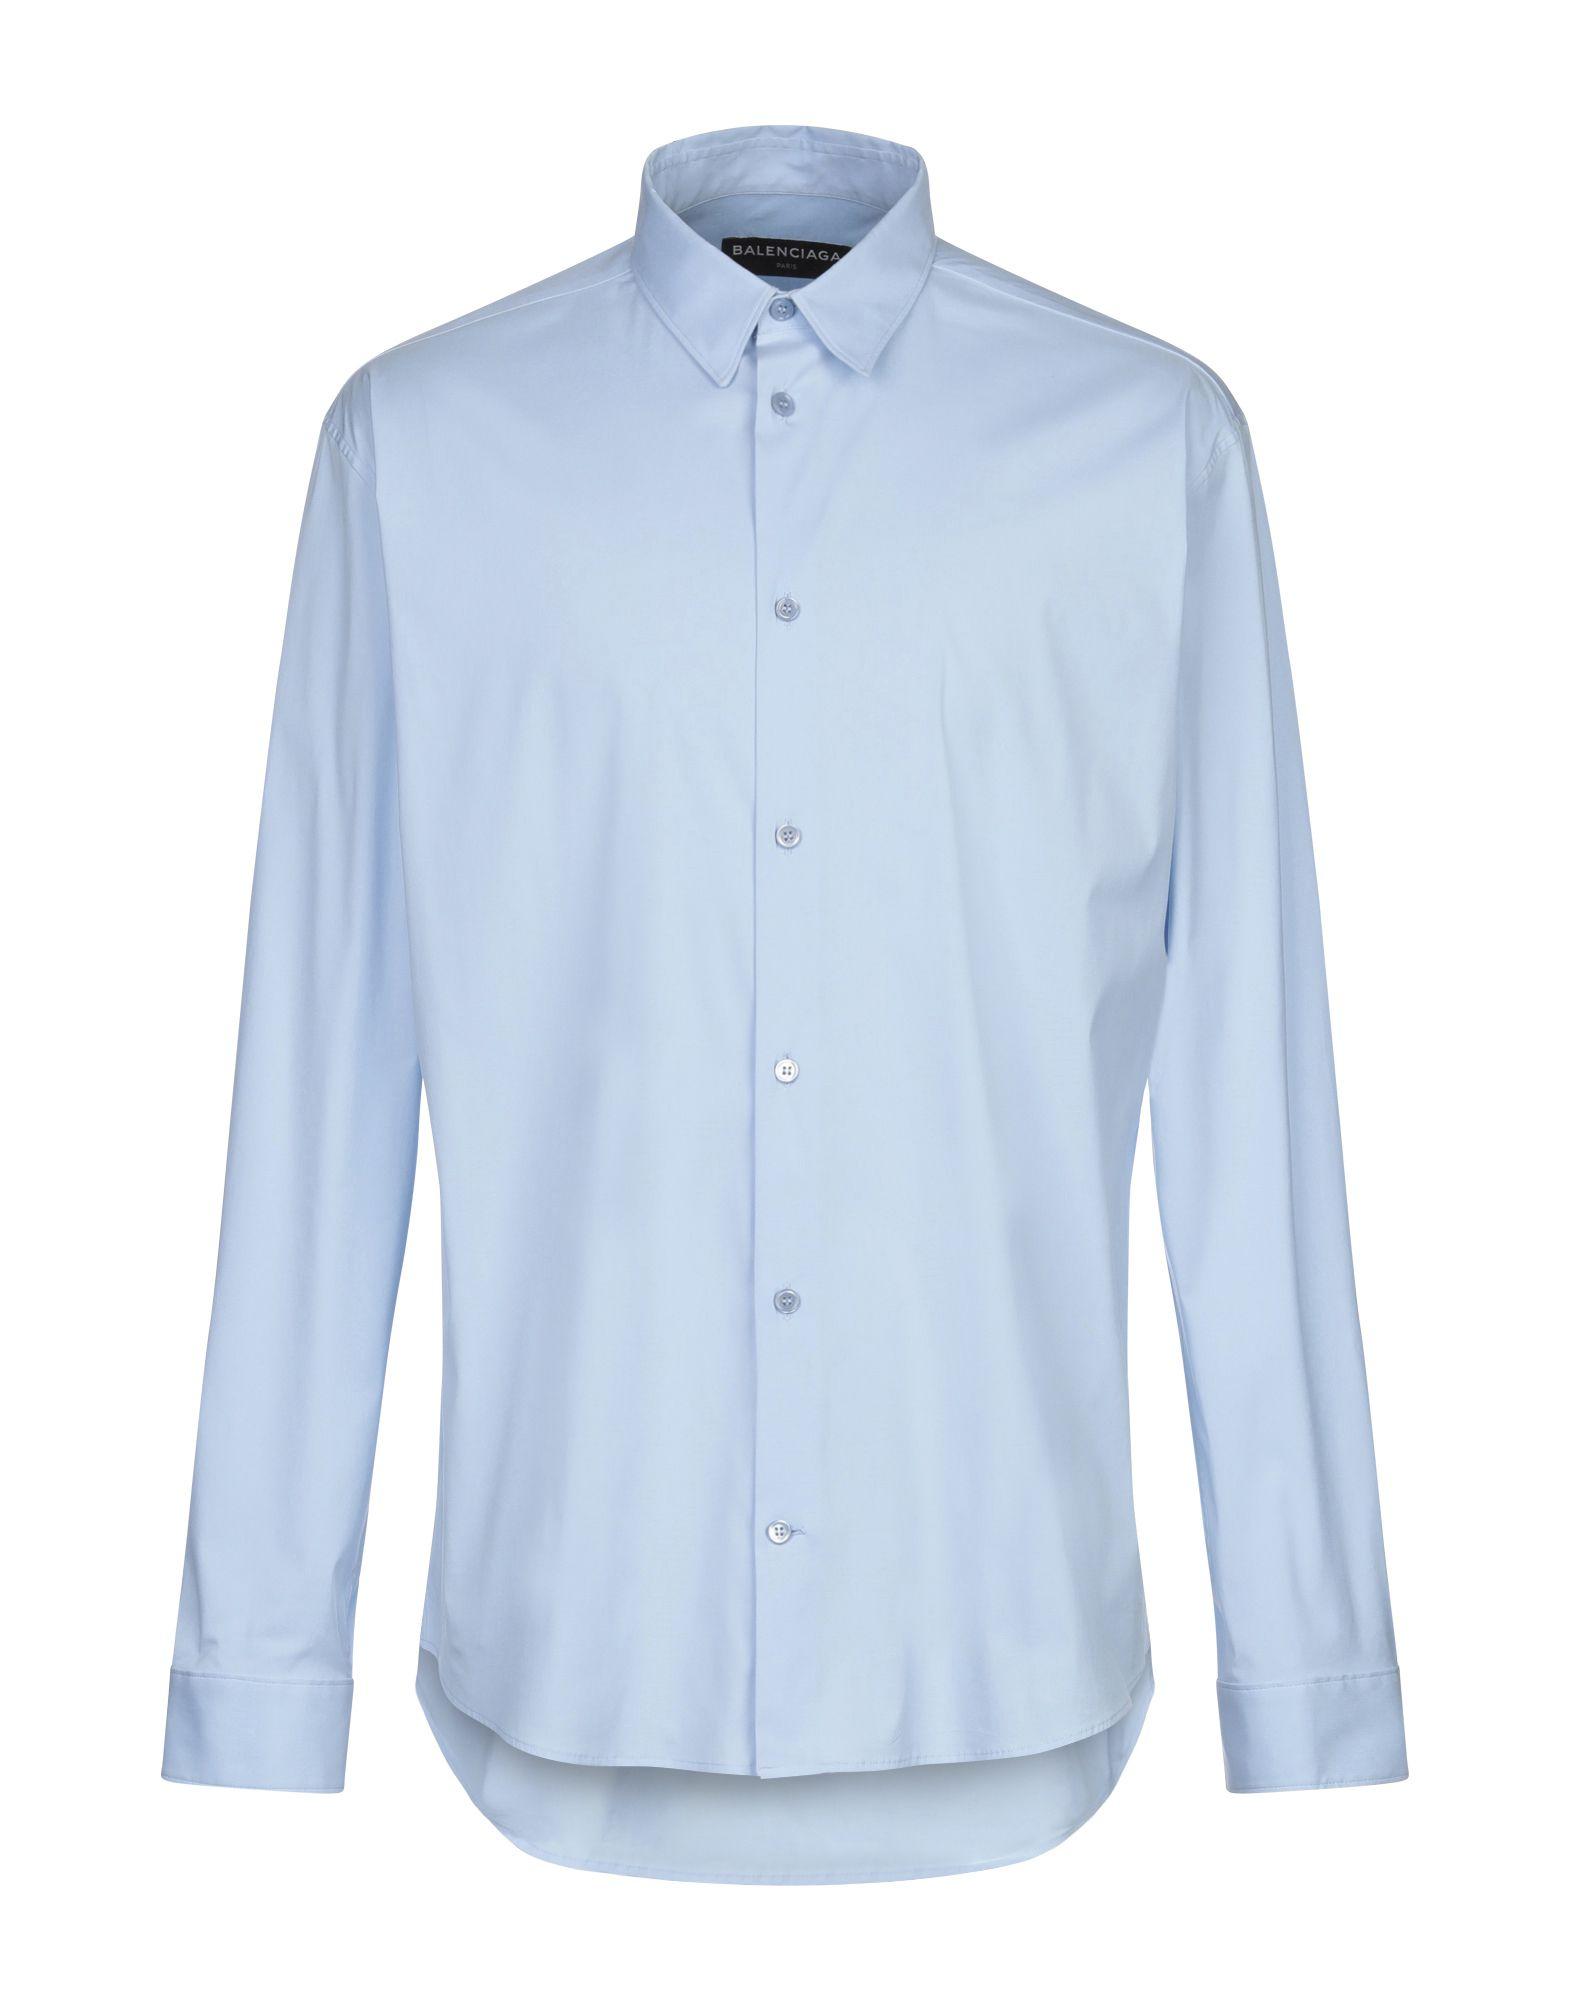 Balenciaga Cotton Shirt in Sky Blue (Blue) for Men - Lyst